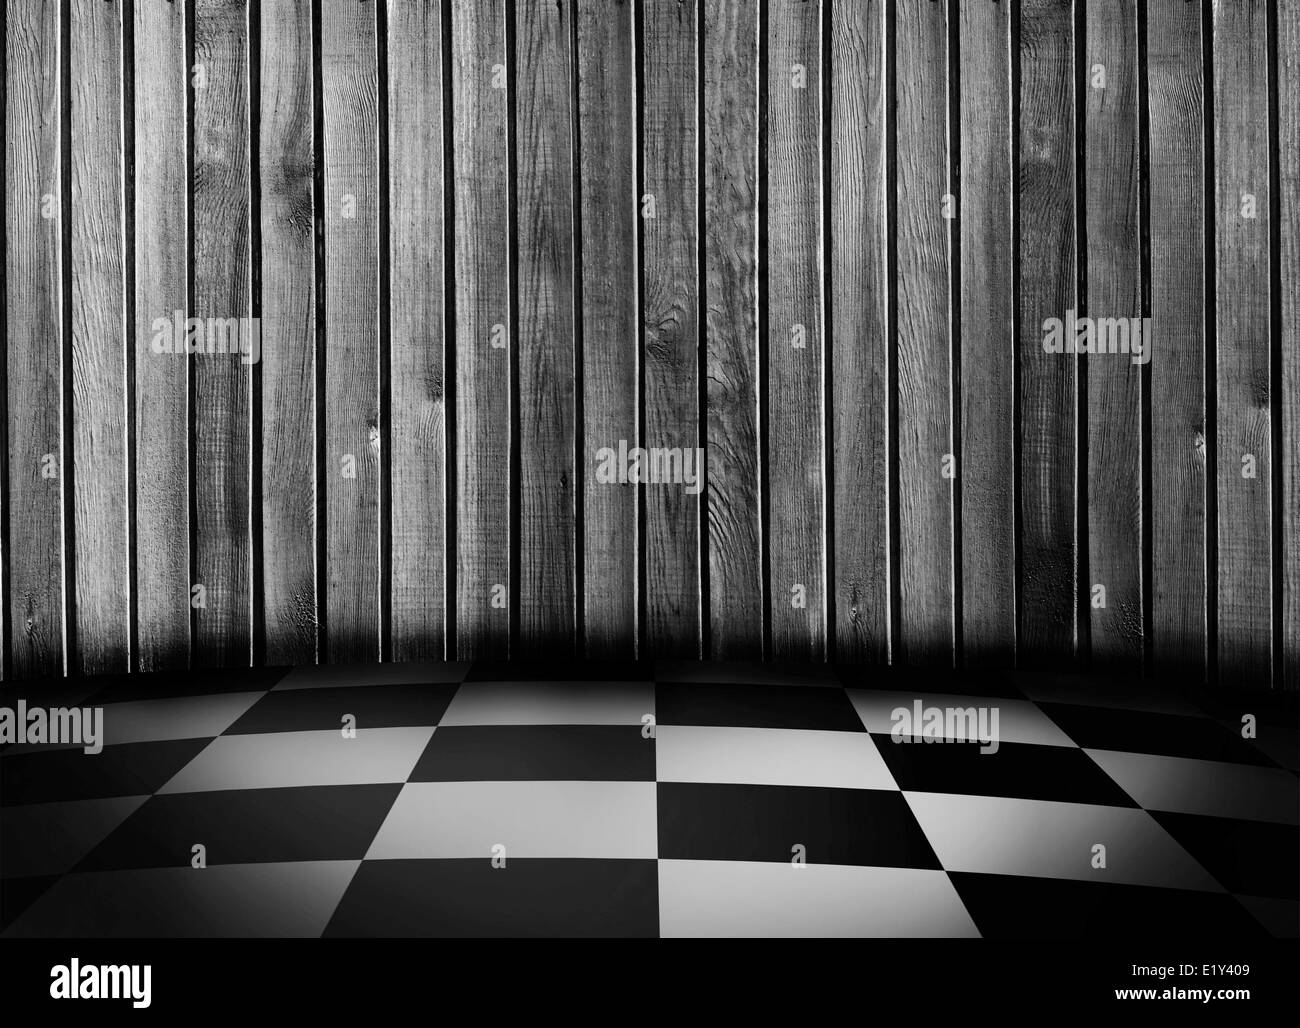 wonderful chess wooden room Stock Photo